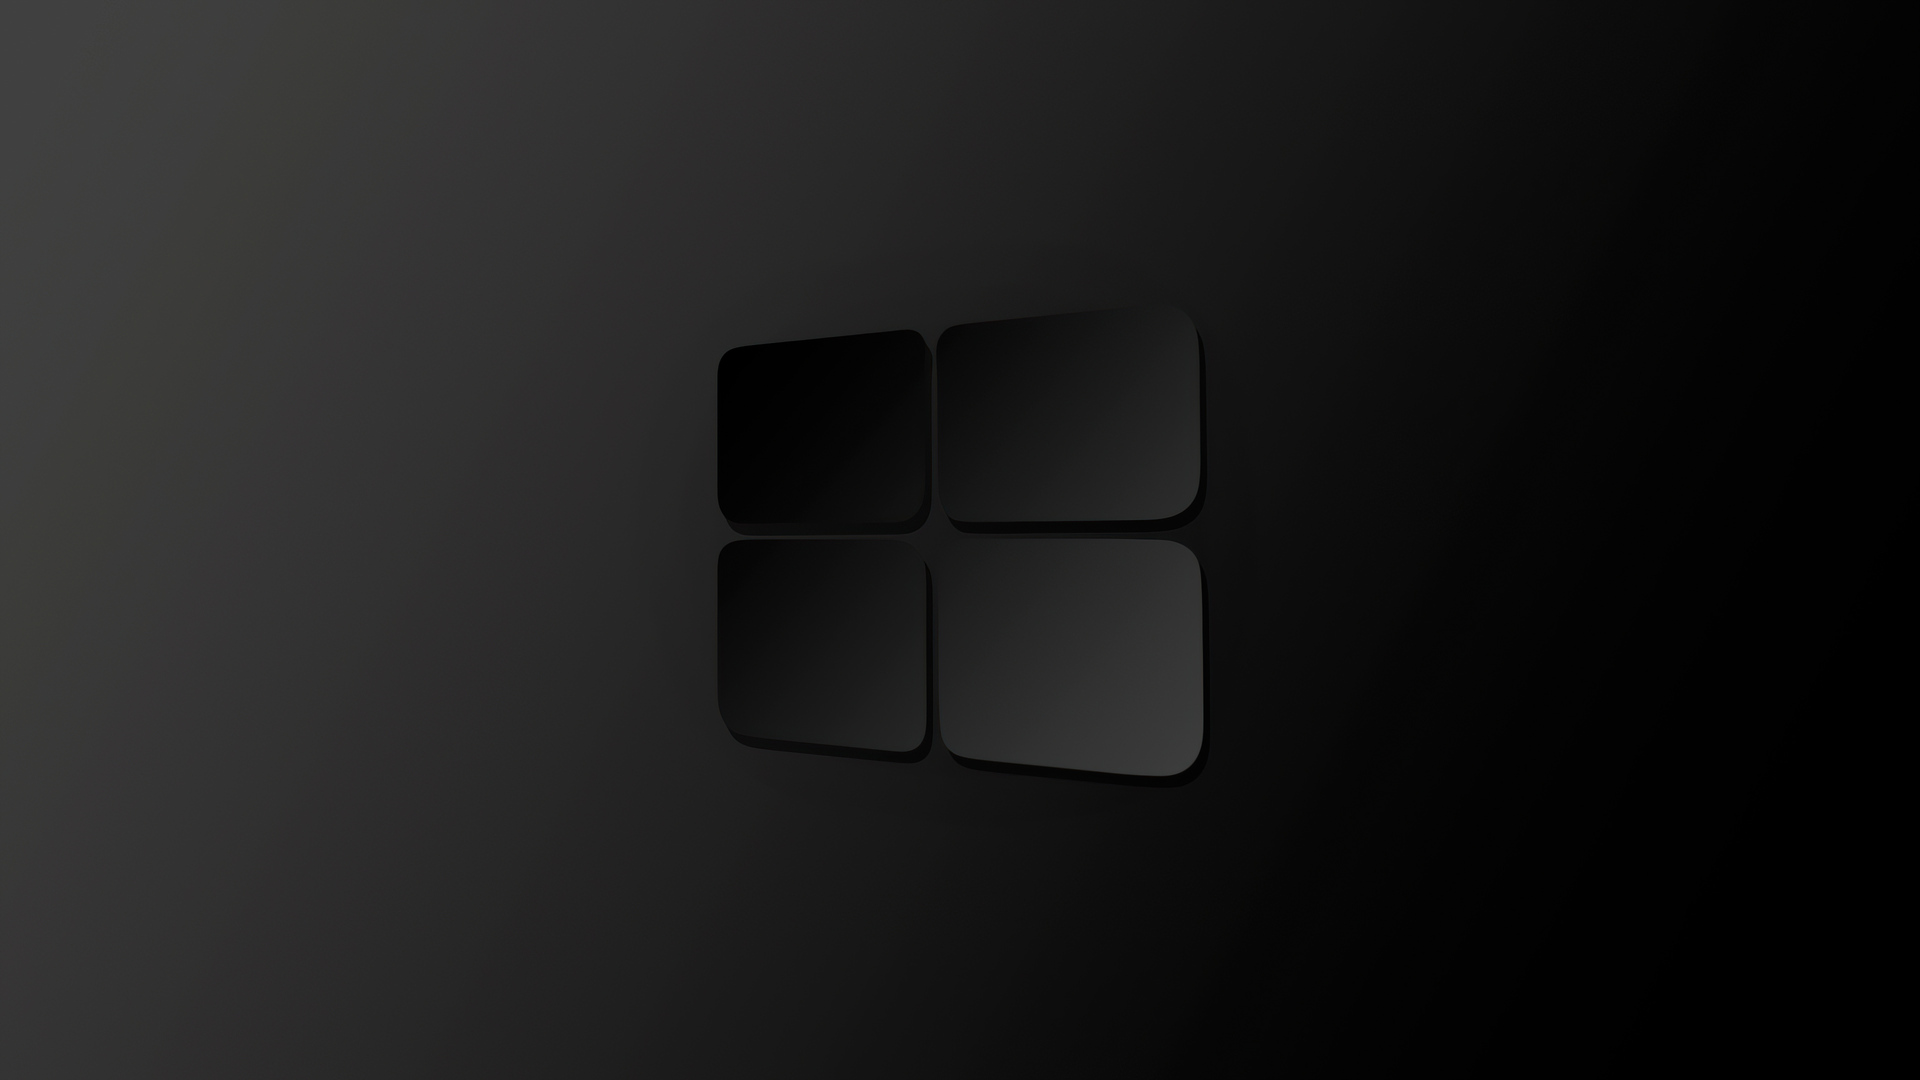 85194 windows 10, windows, computer, hd, 4k, logo, dark, black, minimalism,  minimalist - Rare Gallery HD Wallpapers